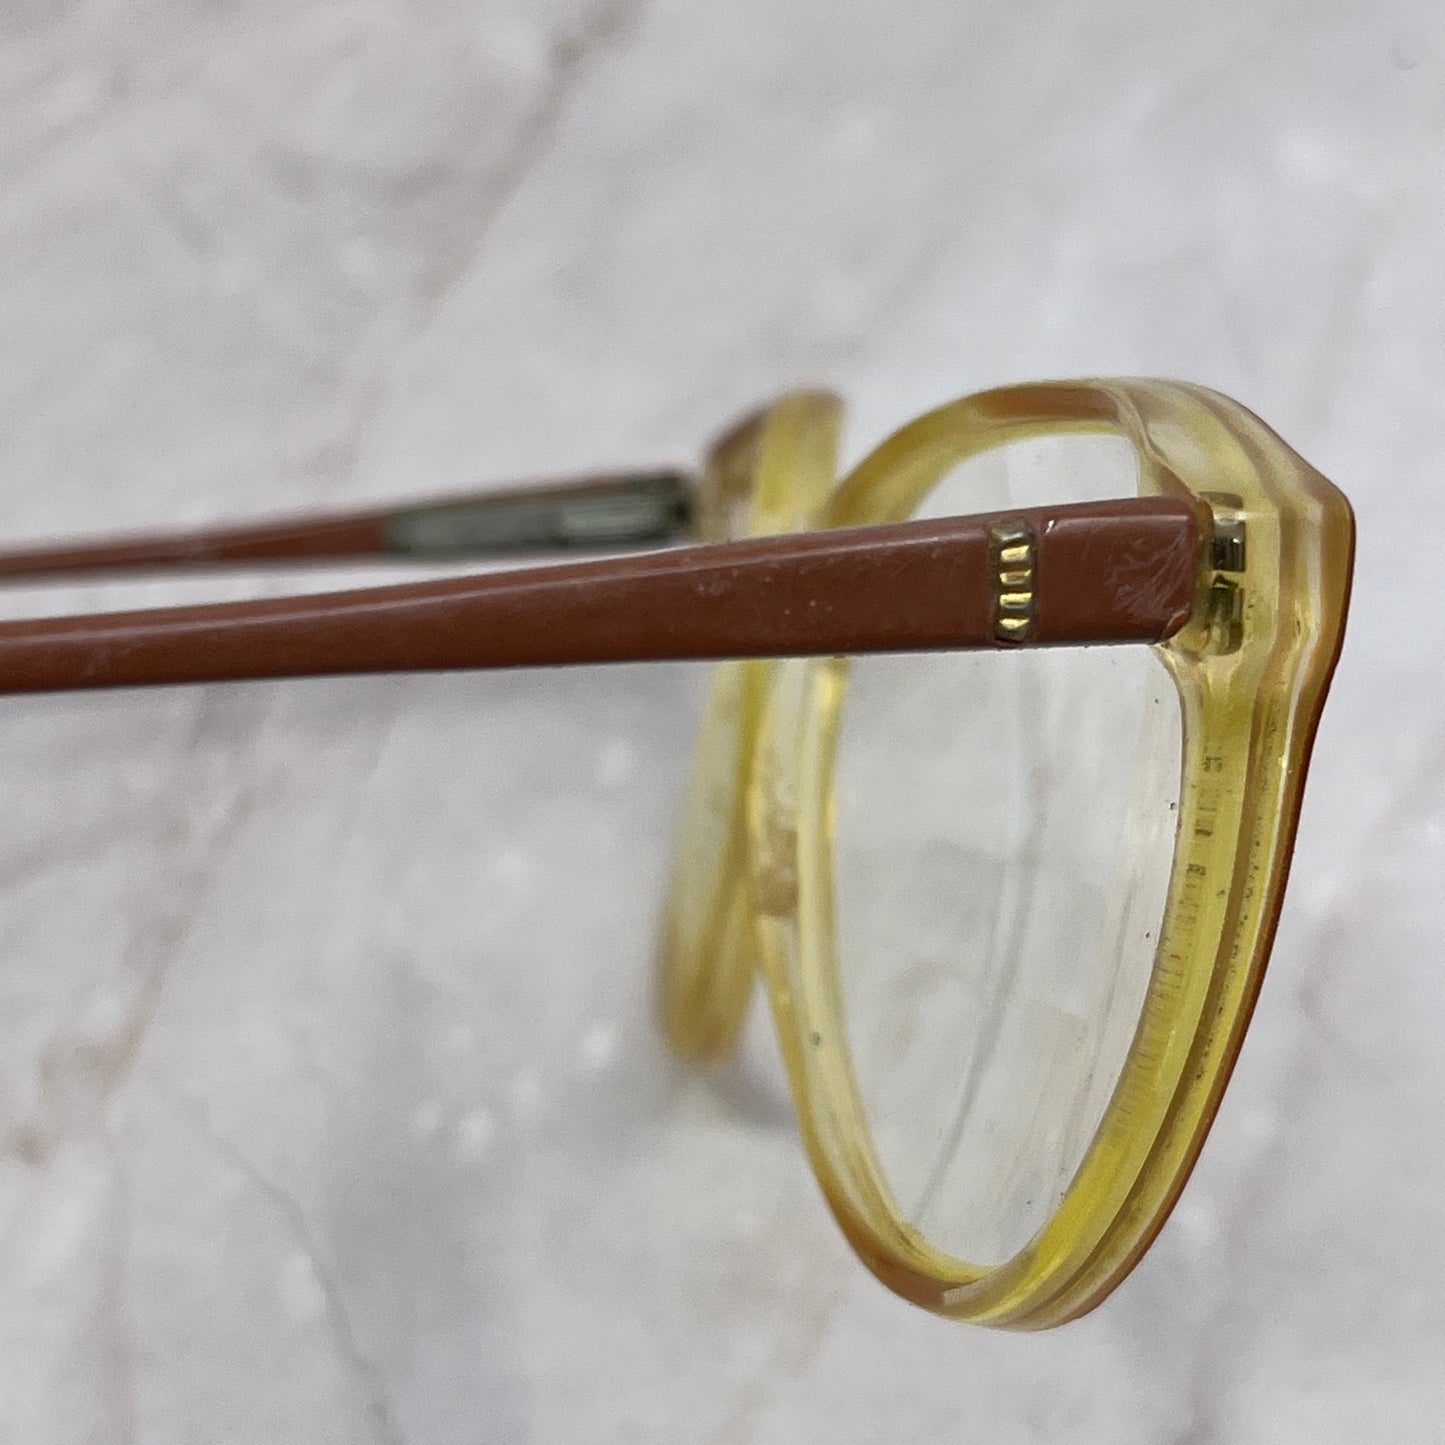 Retro Warner Bros Honey Bunny Acrylic Sunglasses Eyeglasses Frames TG7-G3-2